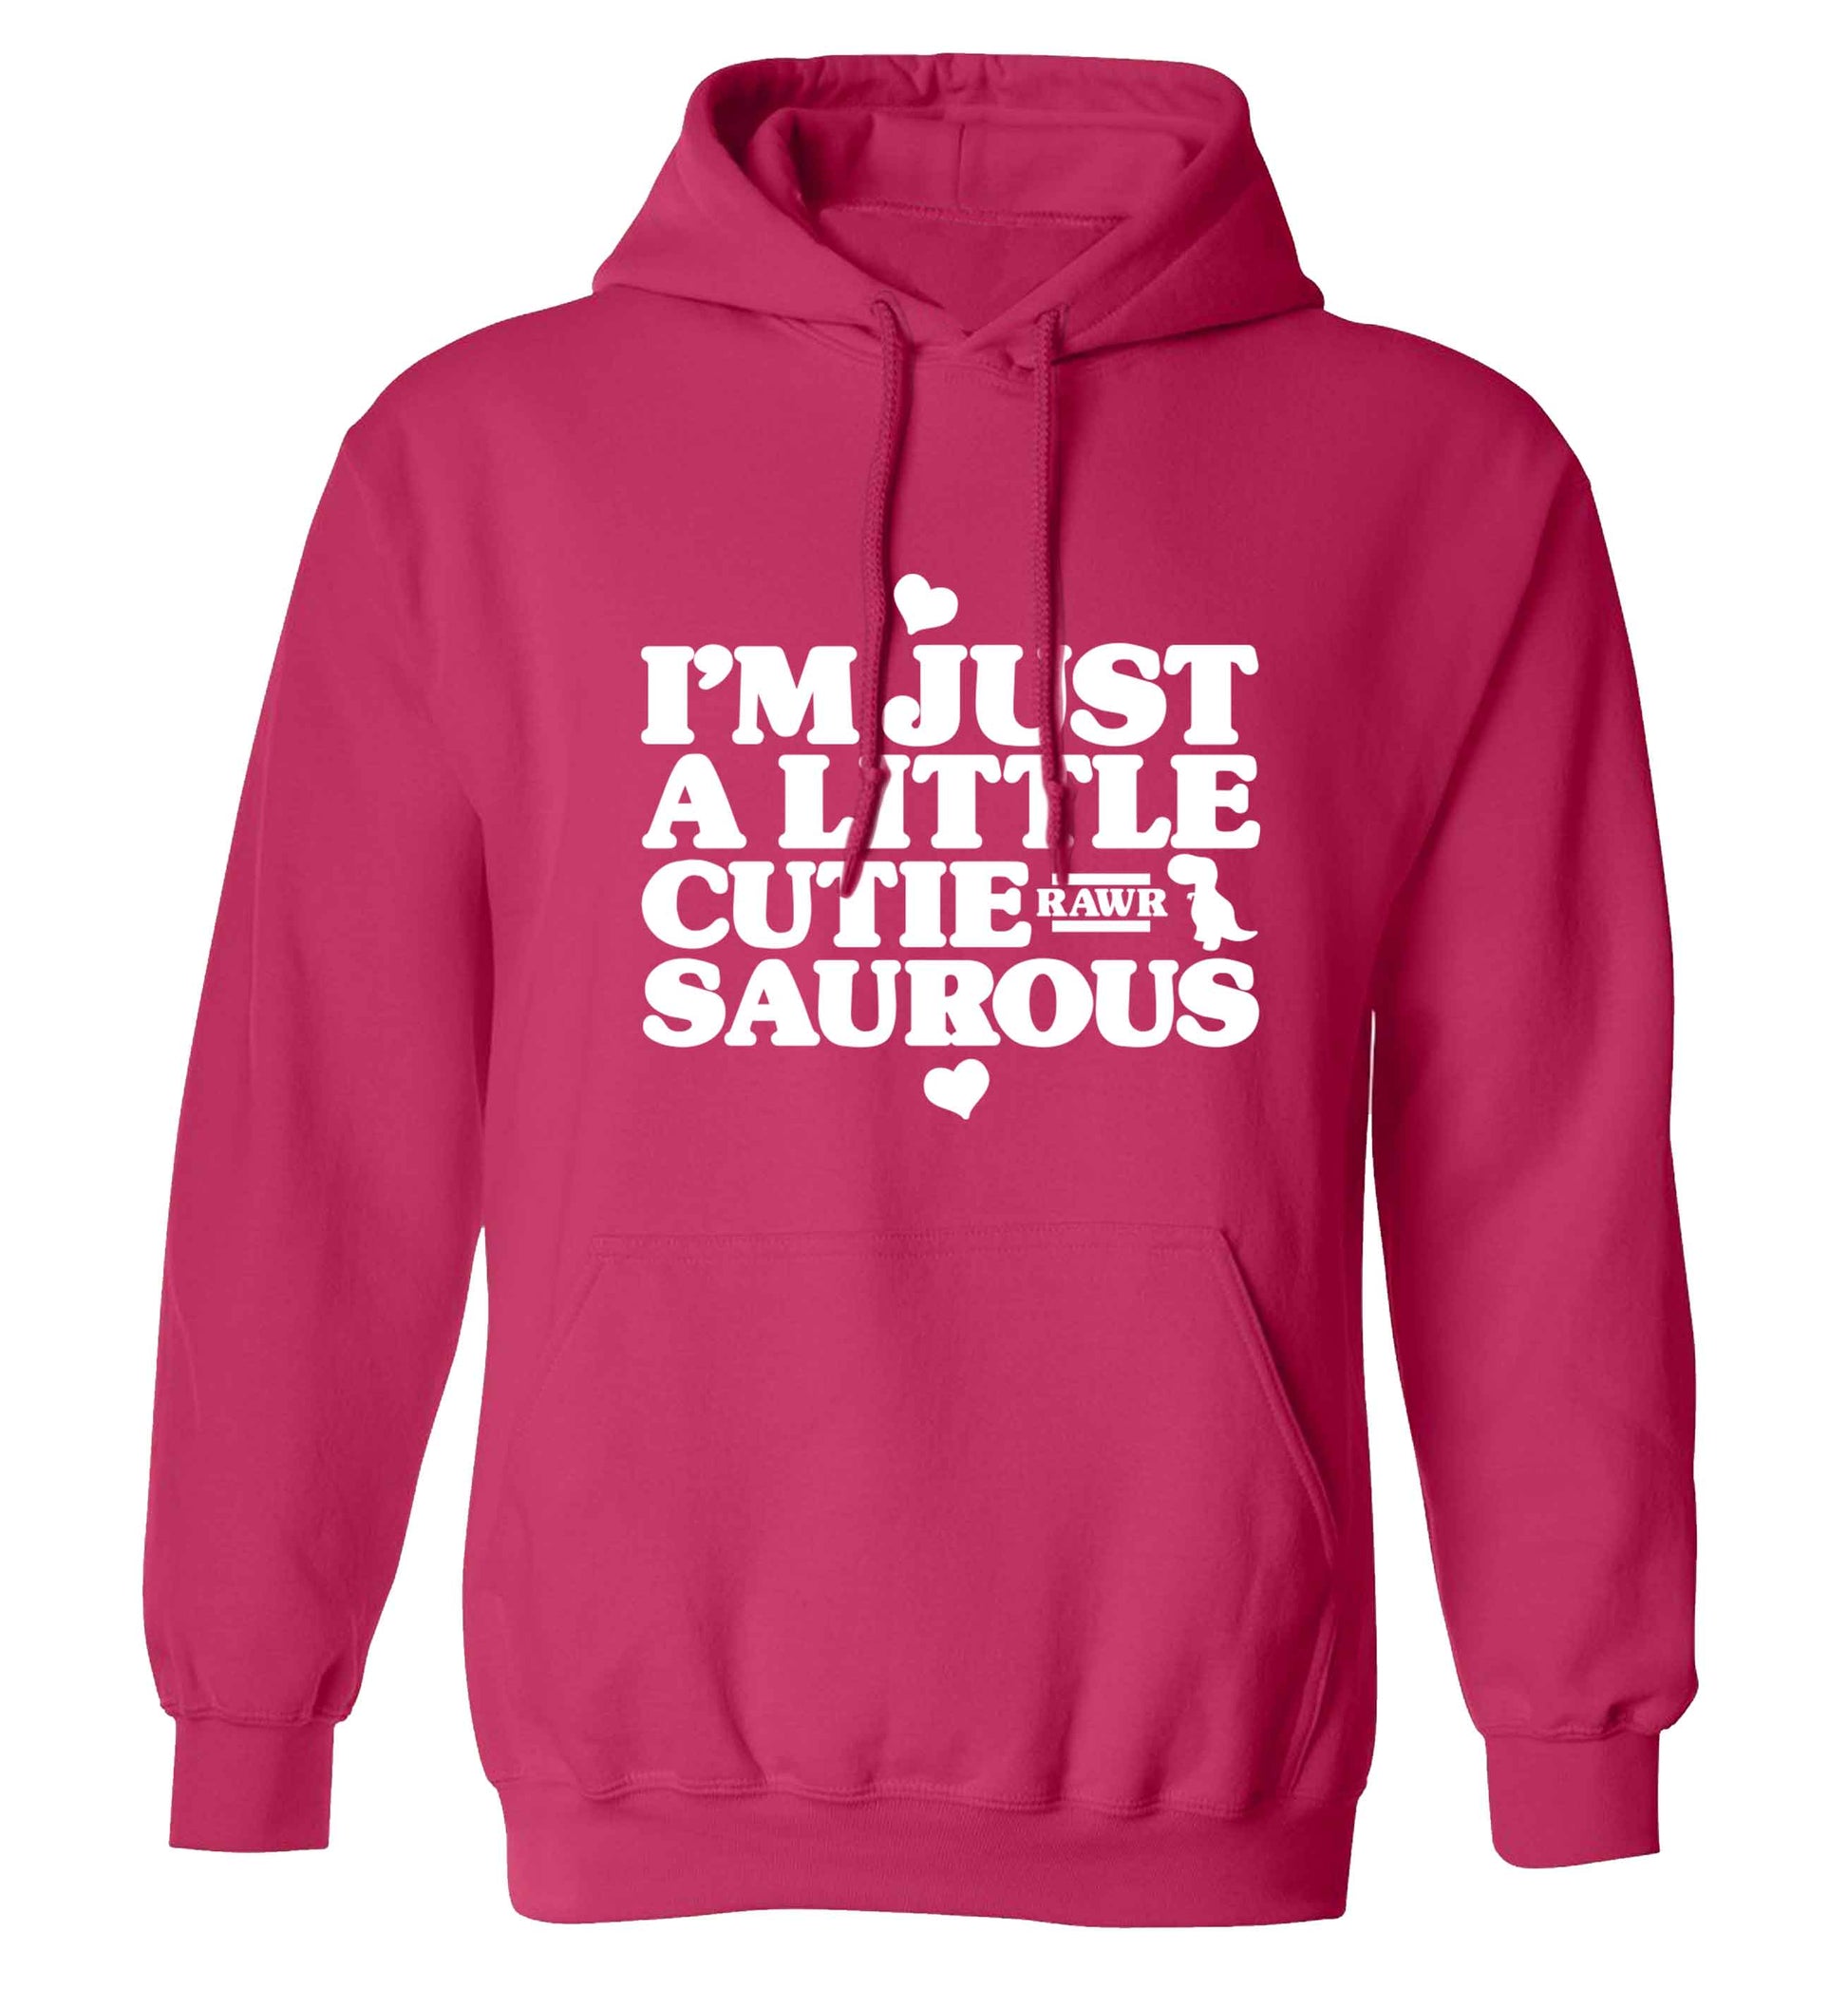 I'm just a little cutiesaurous adults unisex pink hoodie 2XL